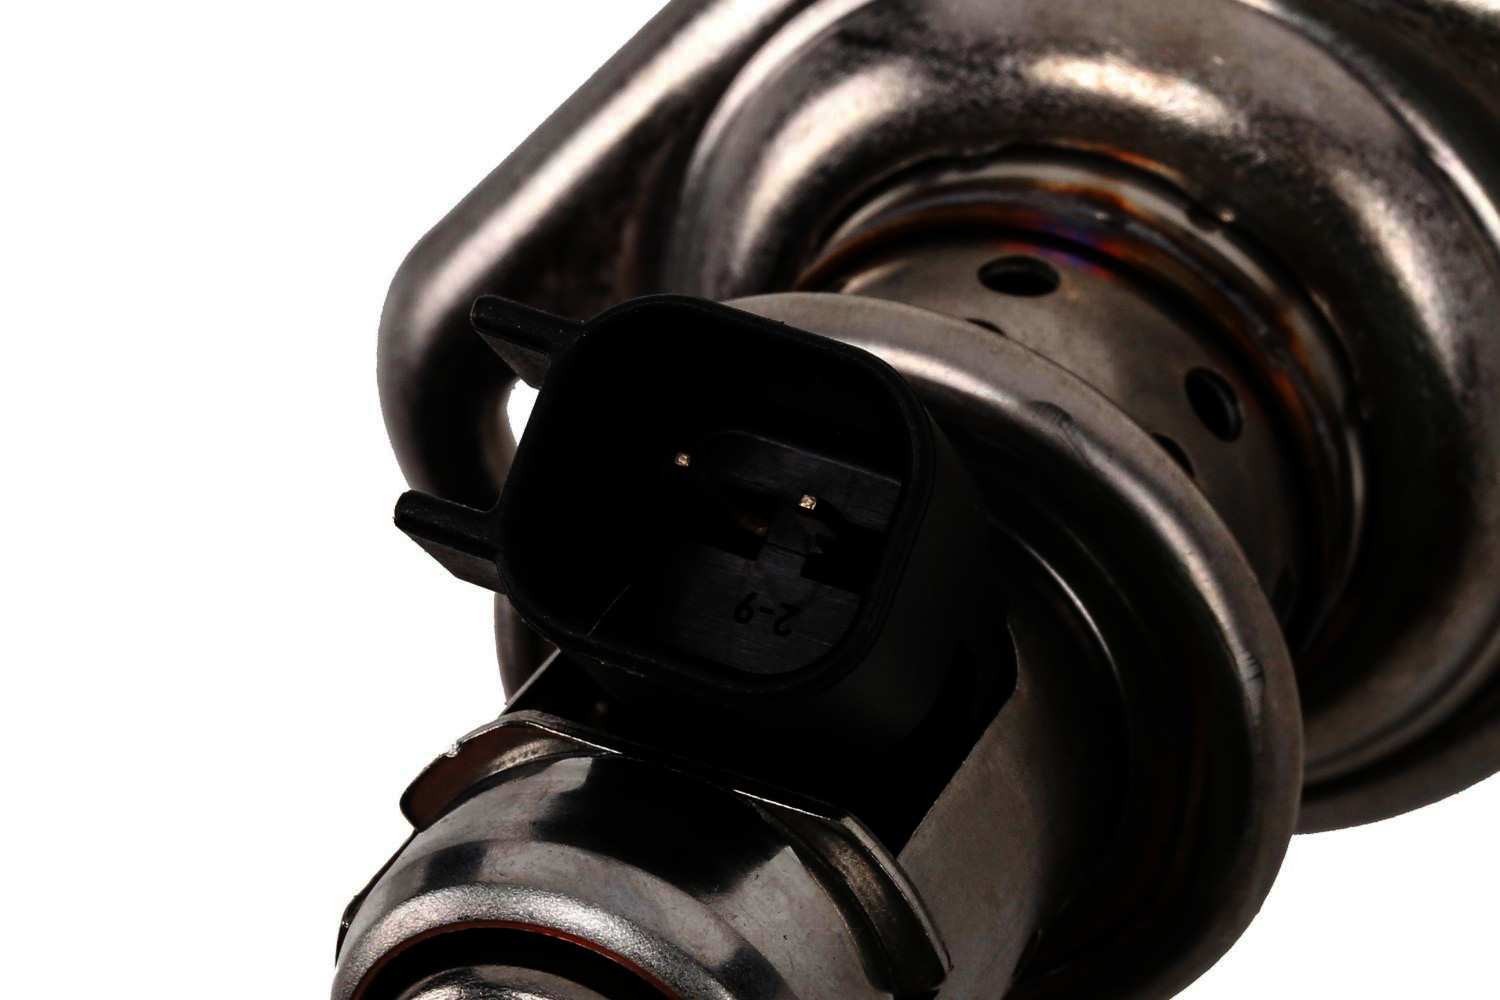 GM GENUINE PARTS CANADA - Diesel Exhaust Fluid (DEF) Injection Nozzle - GMC 55501991